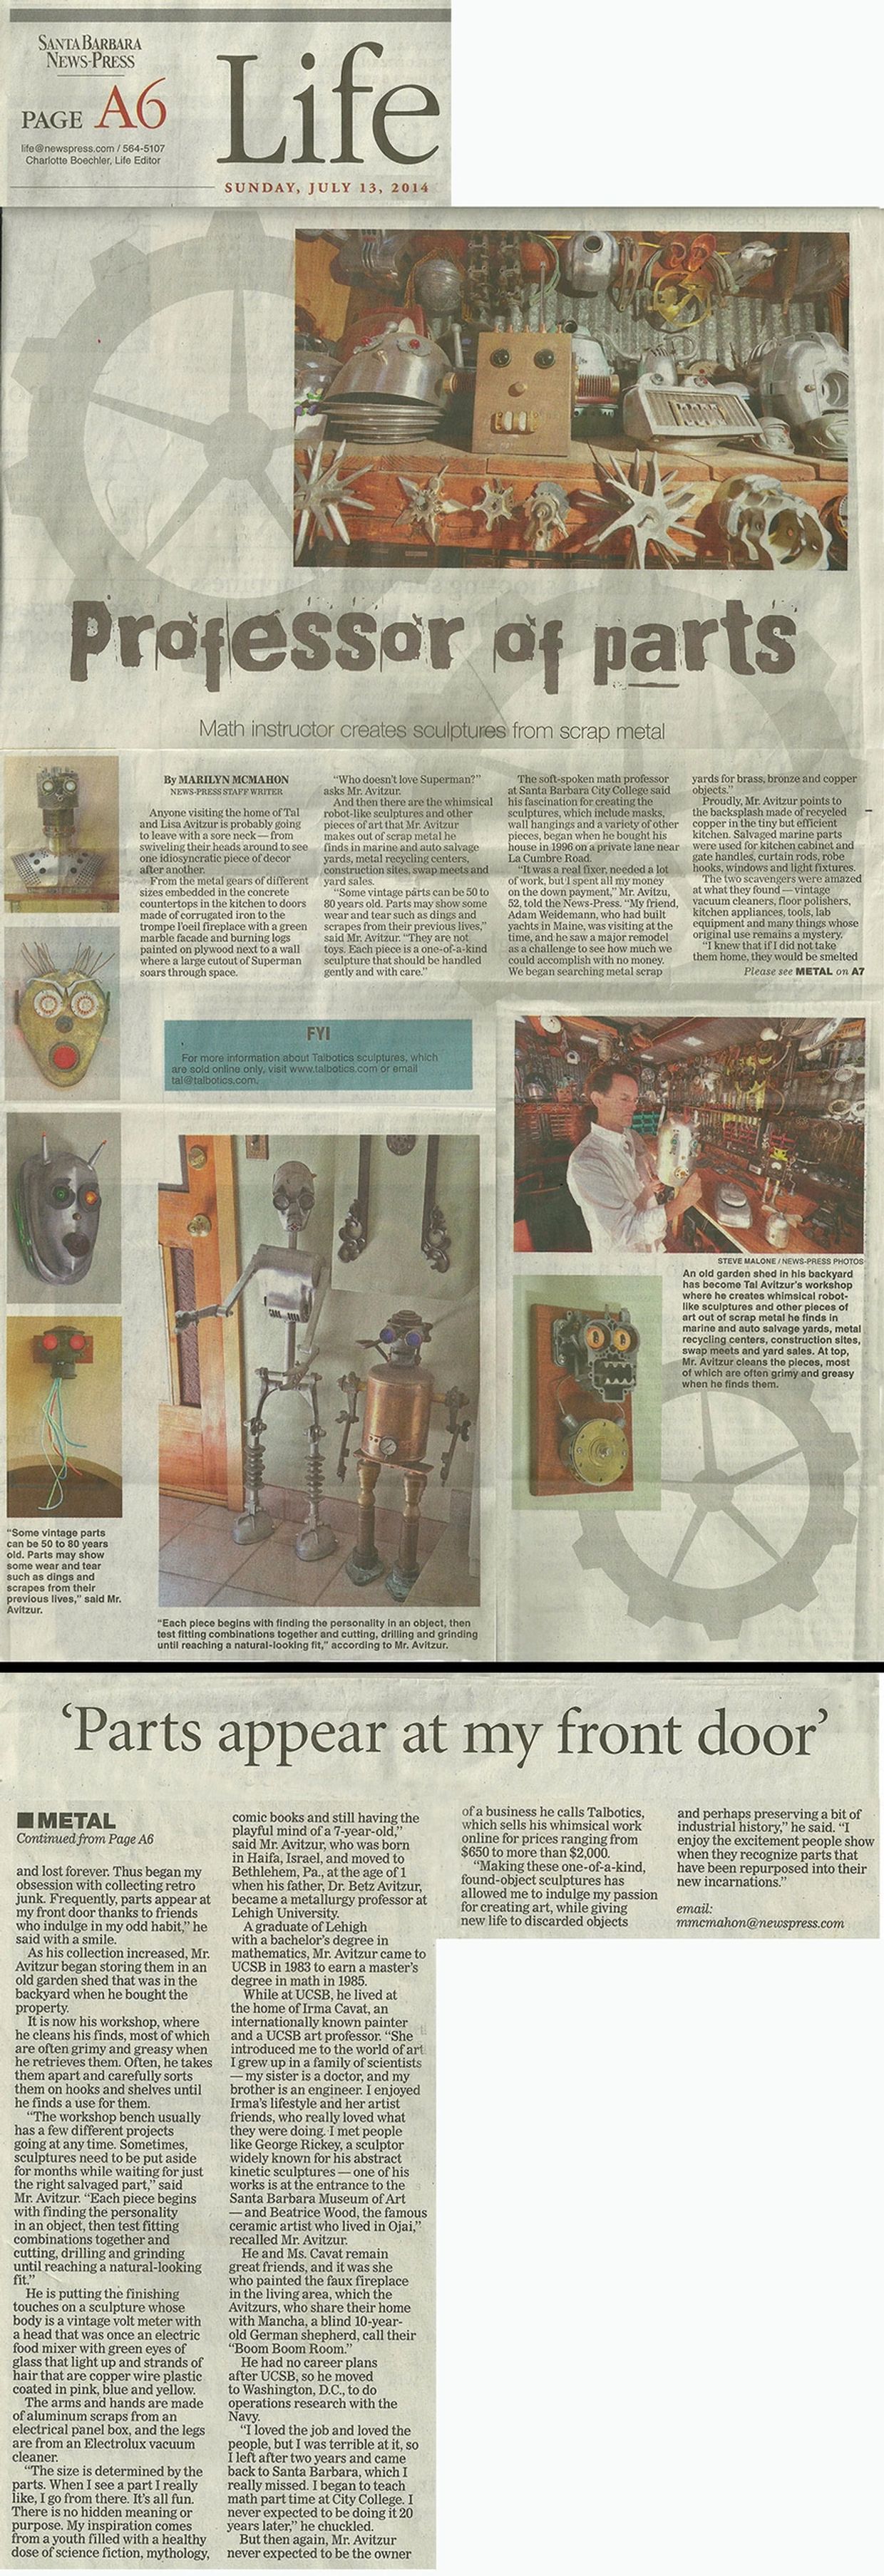 Santa Barbara News-Press article about sculptor Tal Avitzur from July 13, 2014.